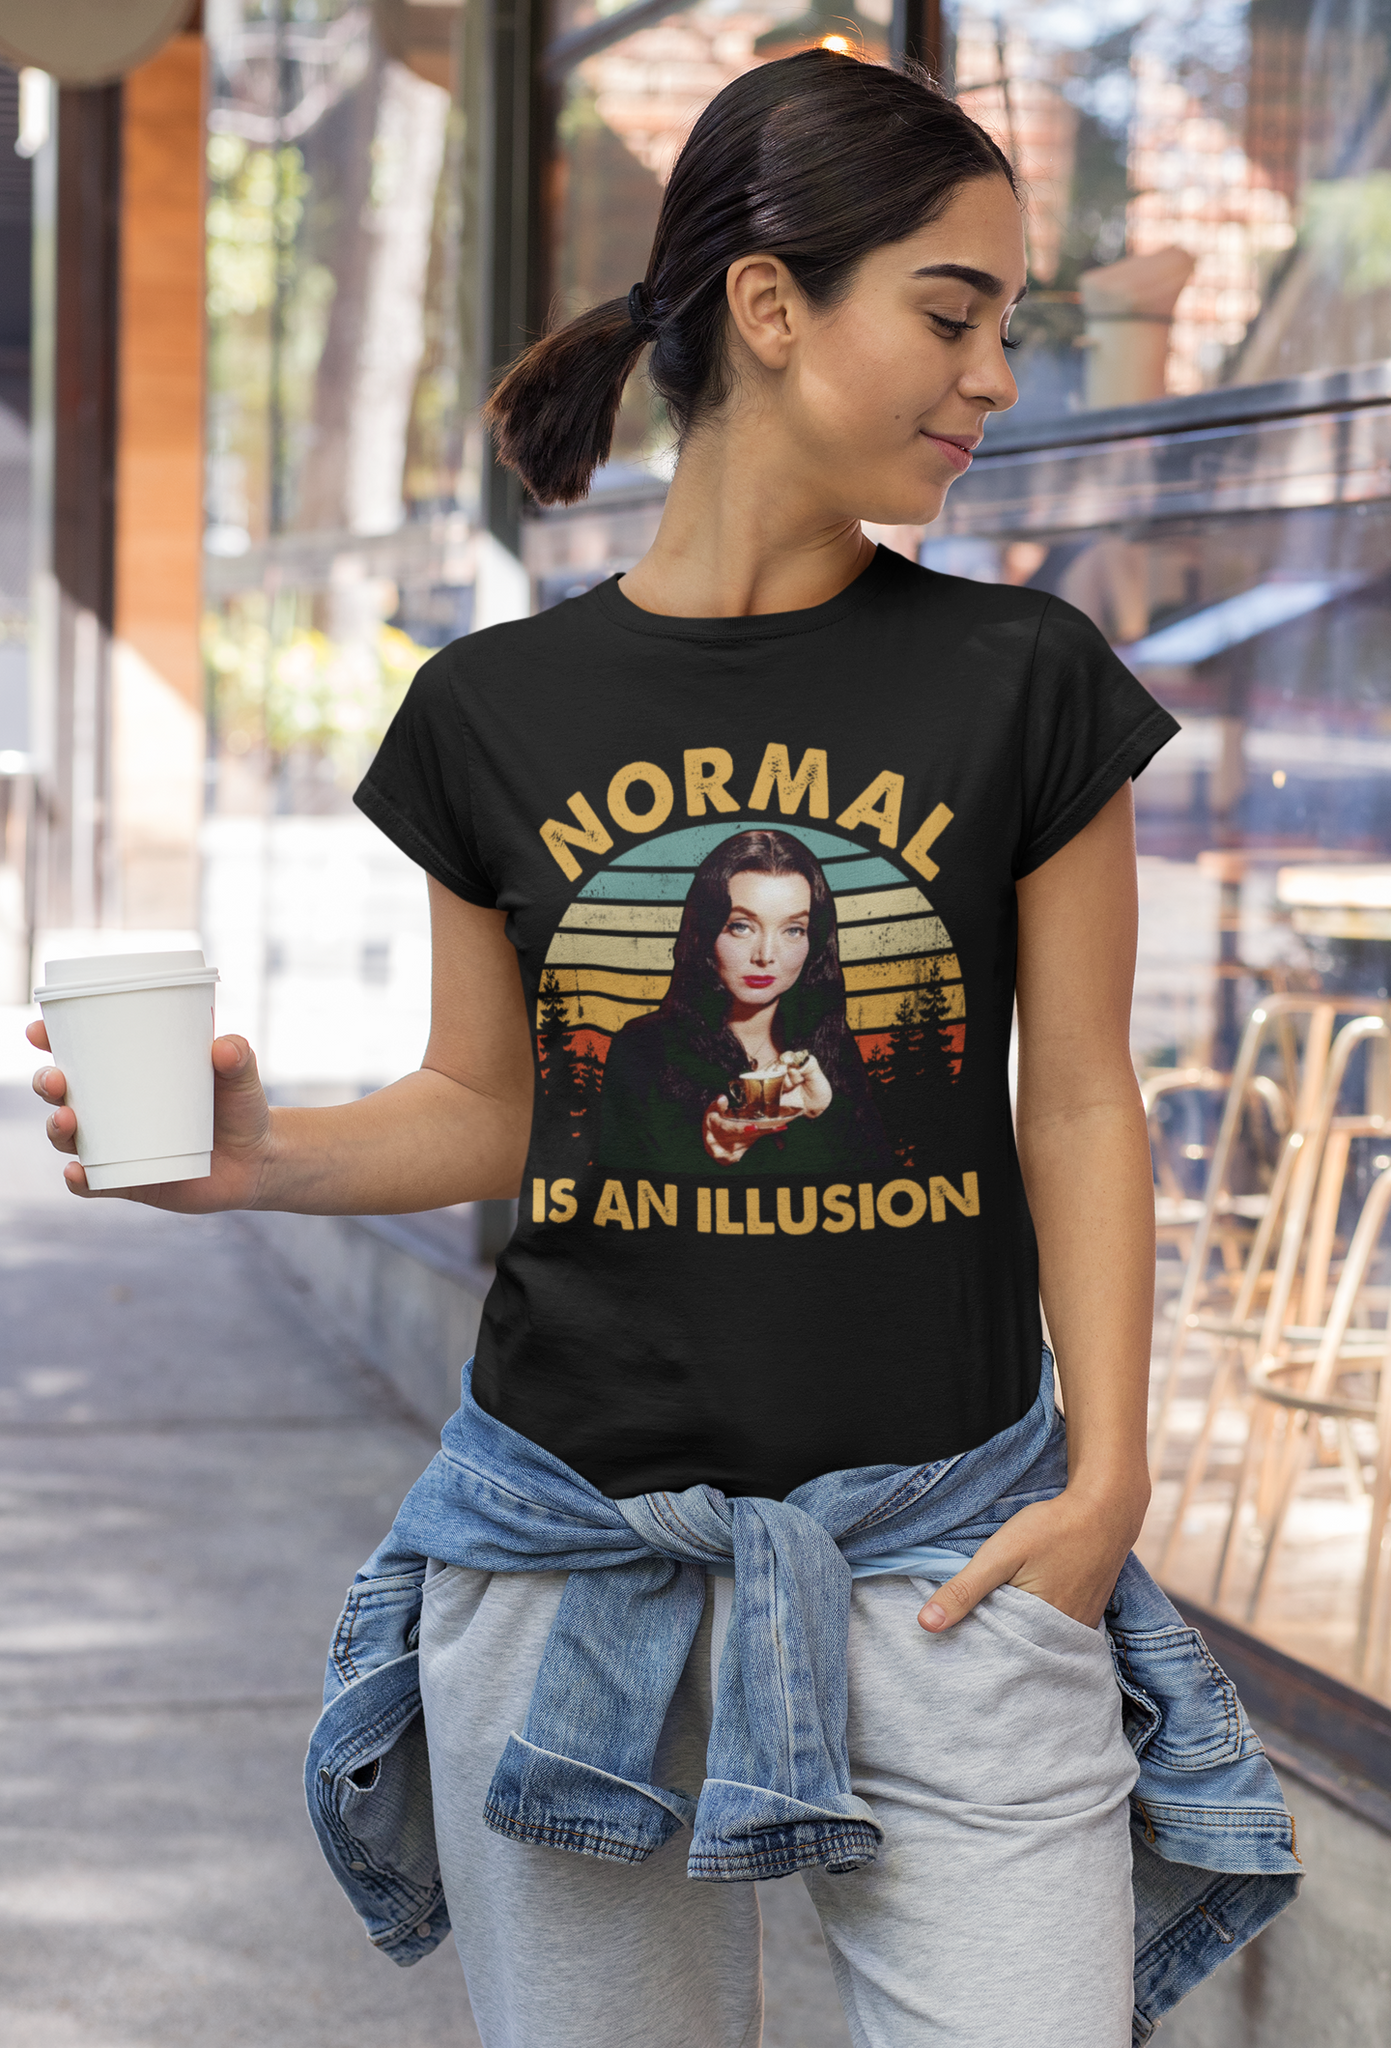 Addams Family Vintage T Shirt, Morticia Addams Tshirt, Normal Is An Illusion Shirt, Halloween Gifts